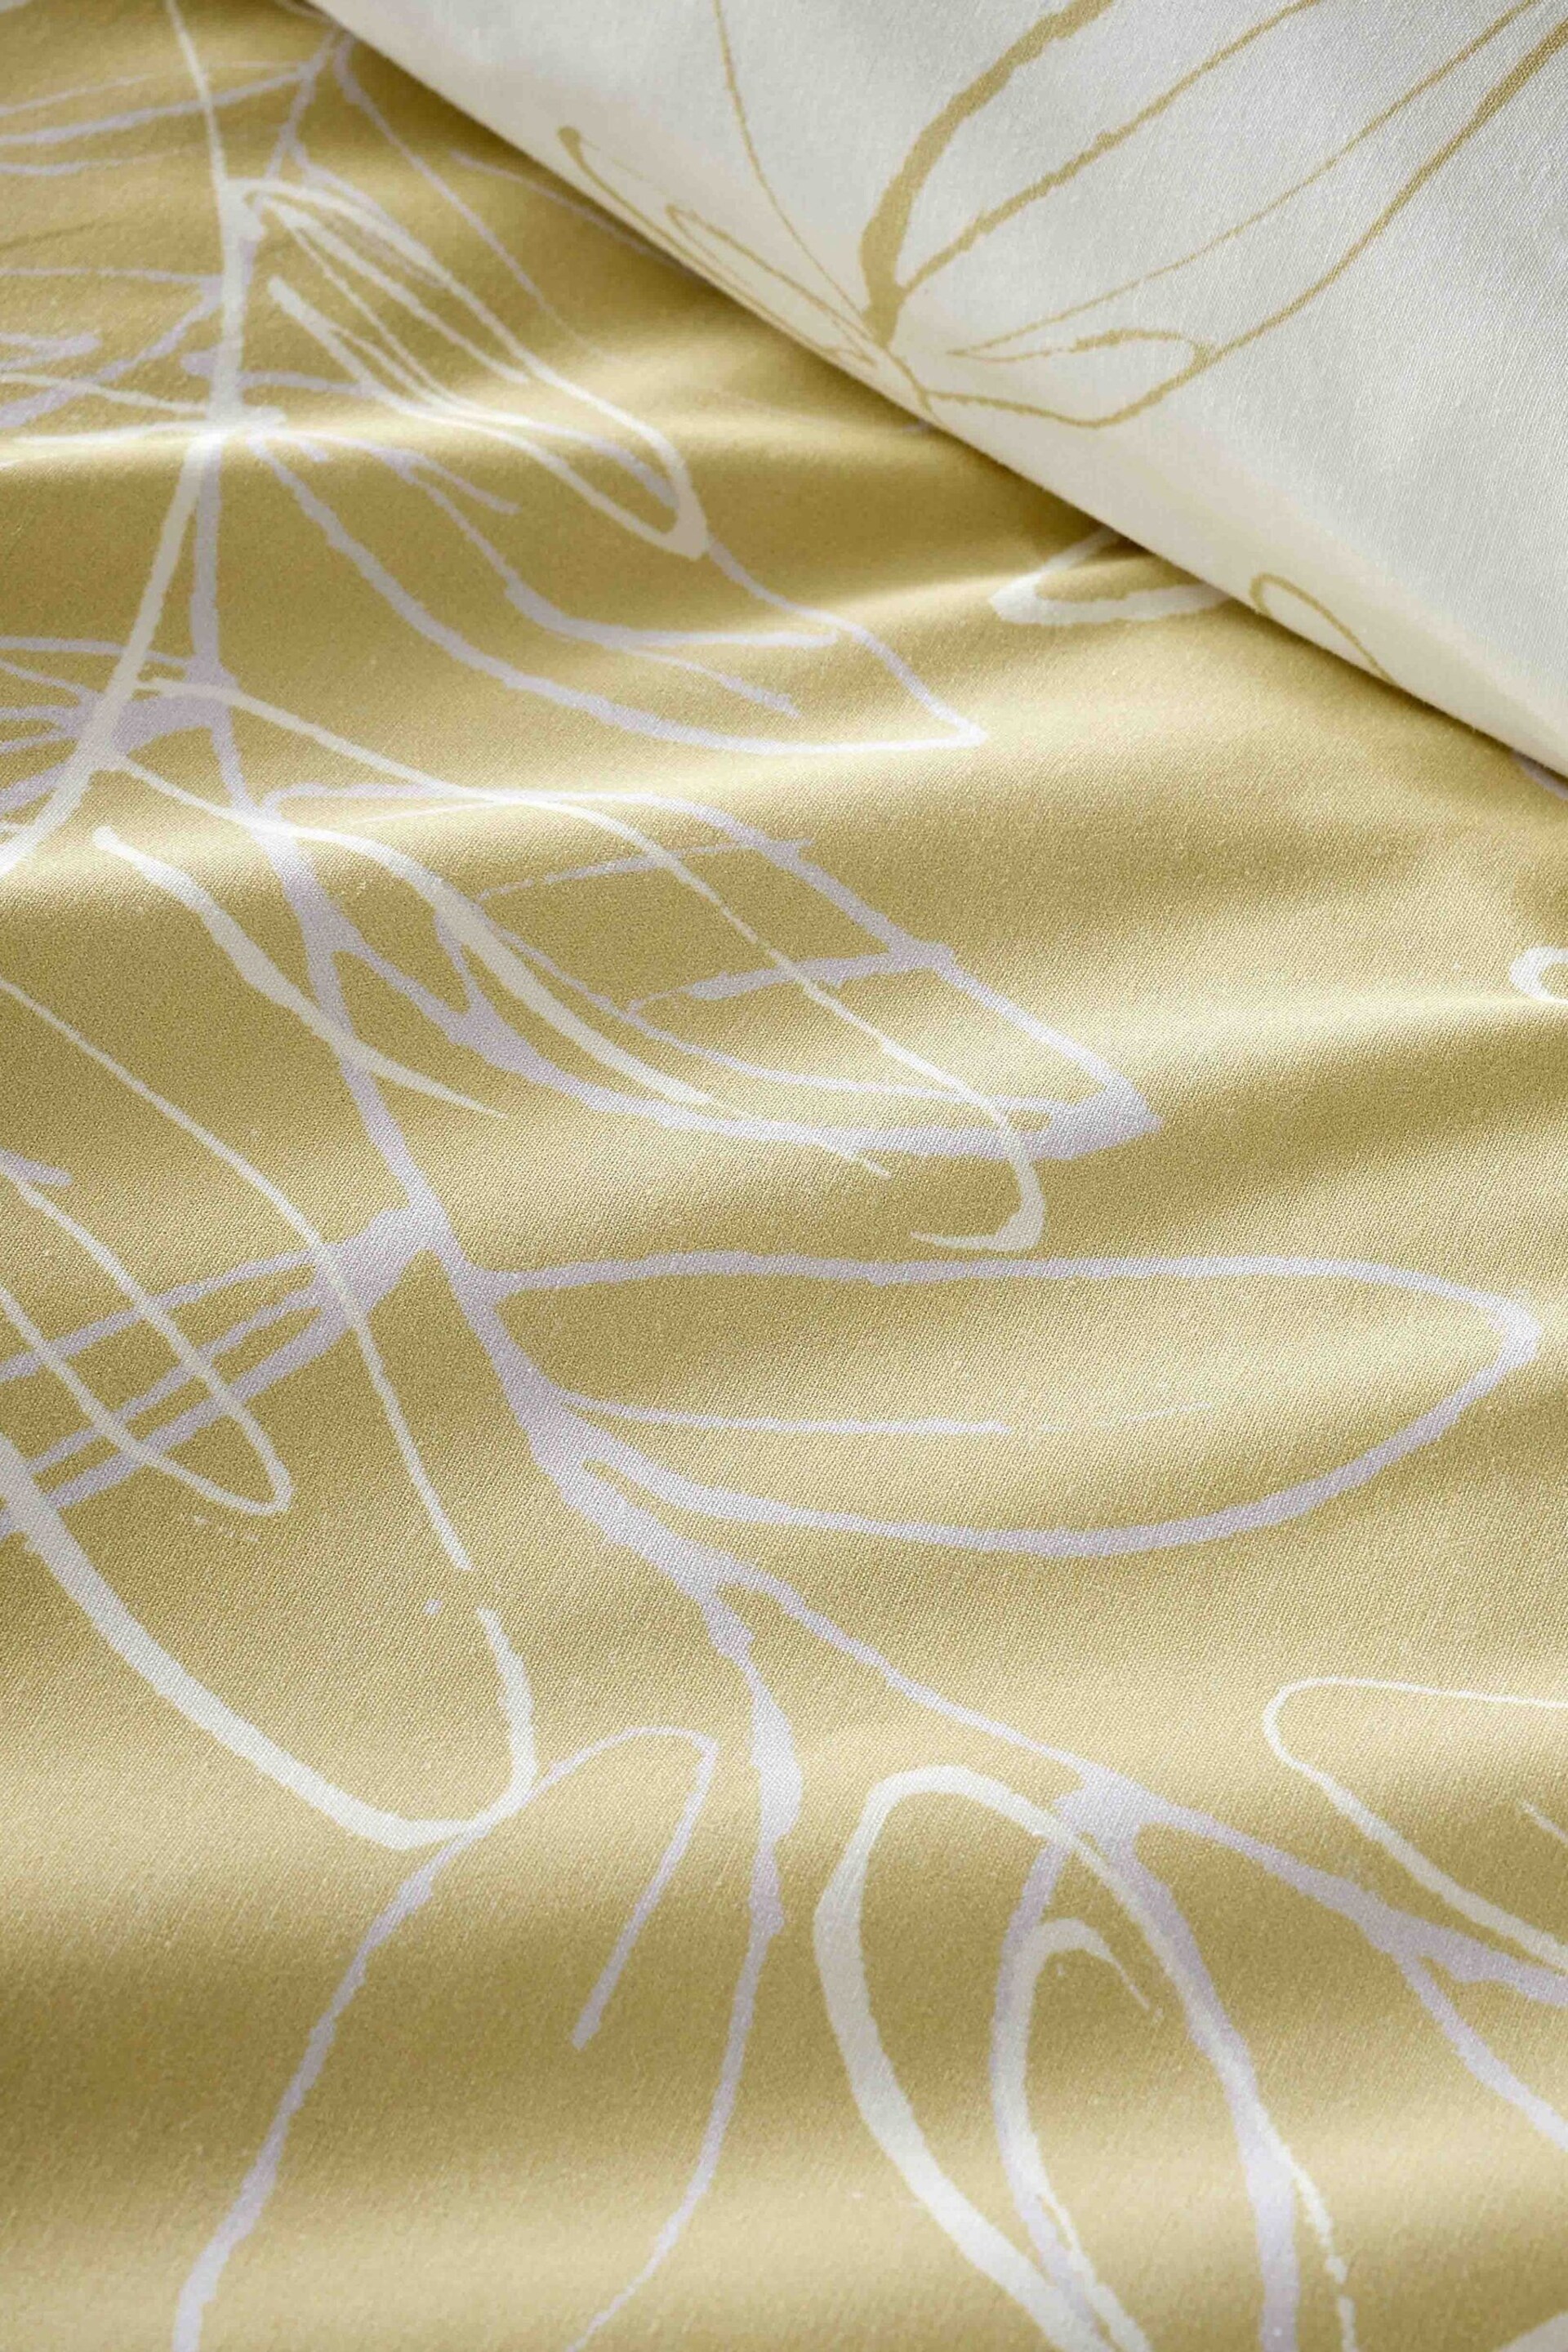 Vantona Cream Linear Leaves Duvet Cover and Pillowcase Set - Image 3 of 4